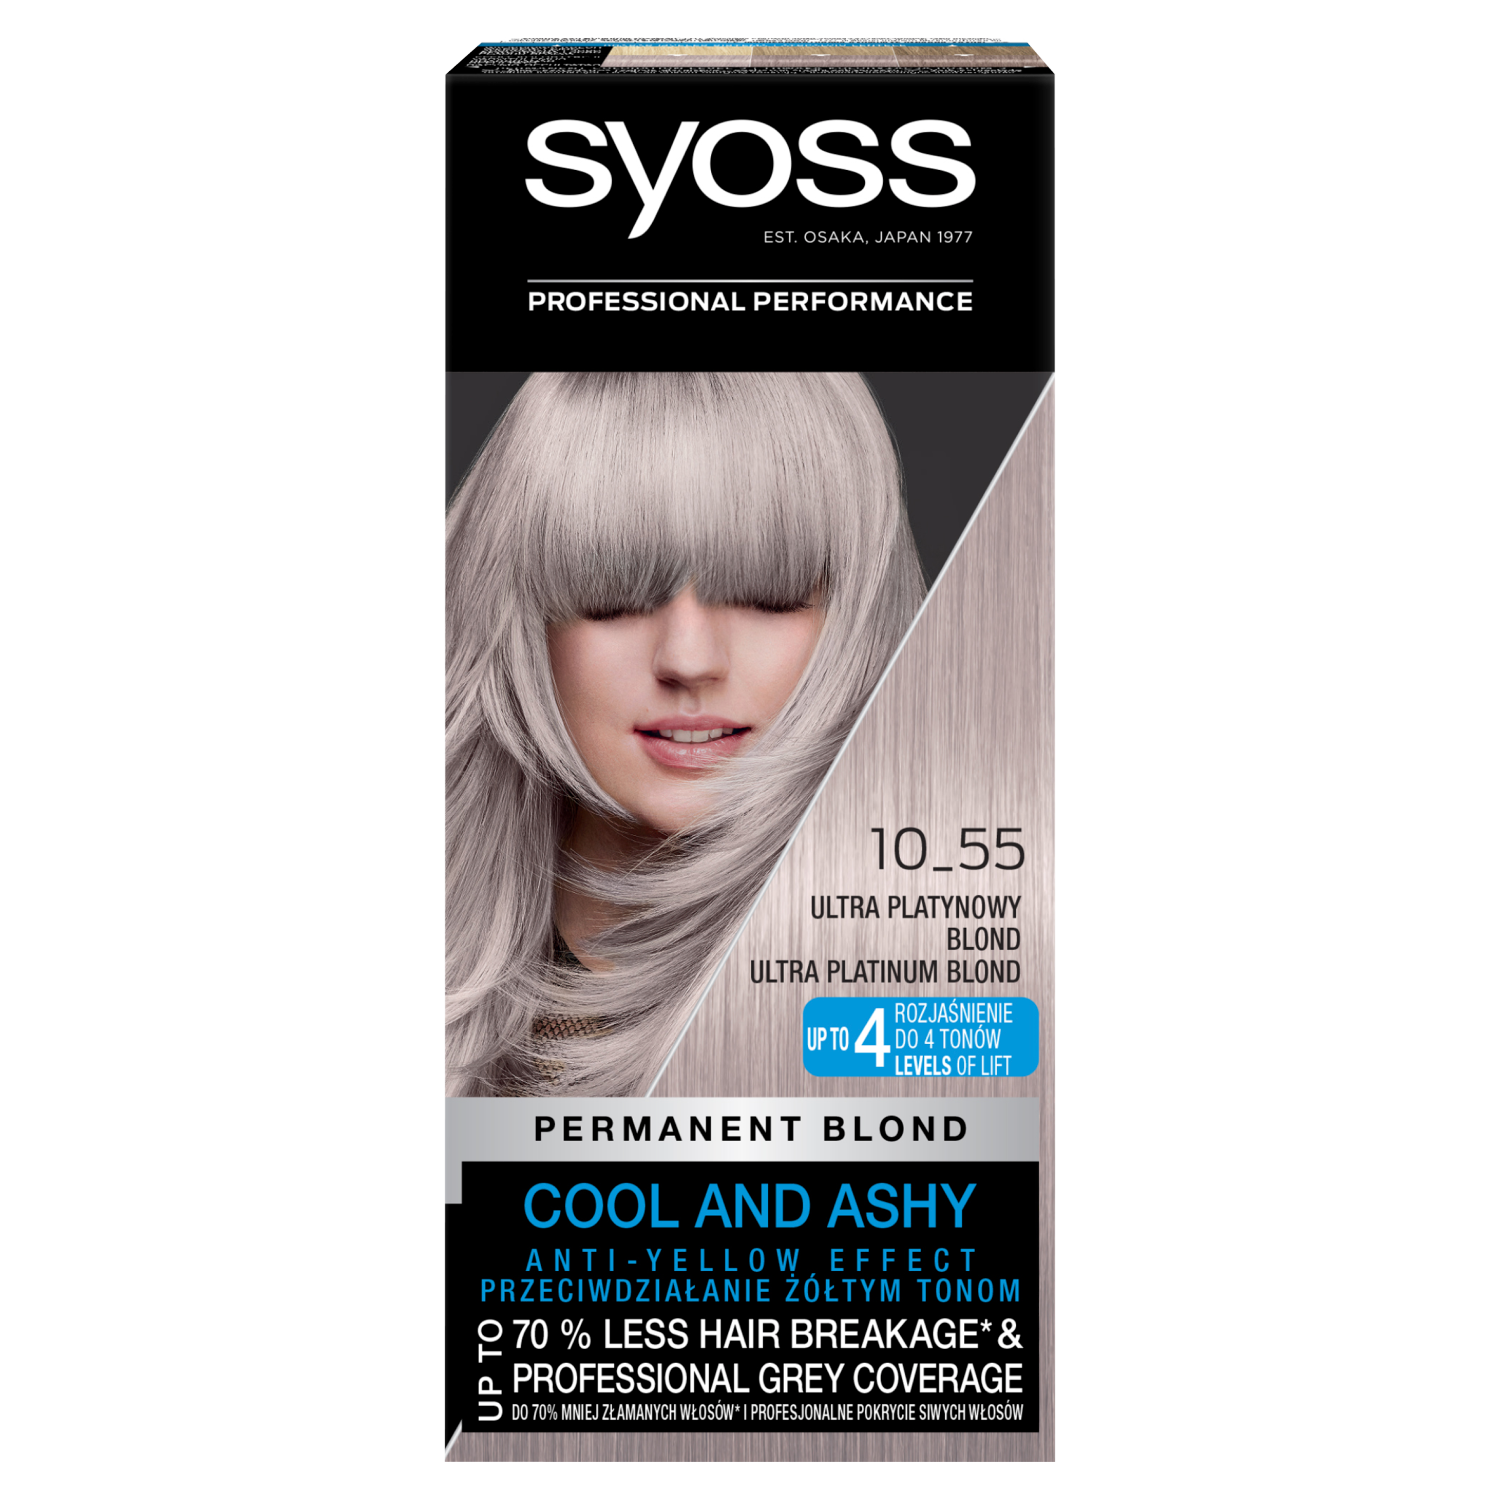 Краска Syoss professional Performance платиновый. Крем-краска для волос Syoss 10-55 ультра платиновый блонд. Сьёс краска платиновый блонд. Краска сьес 10-55. Лучшая пепельная краска